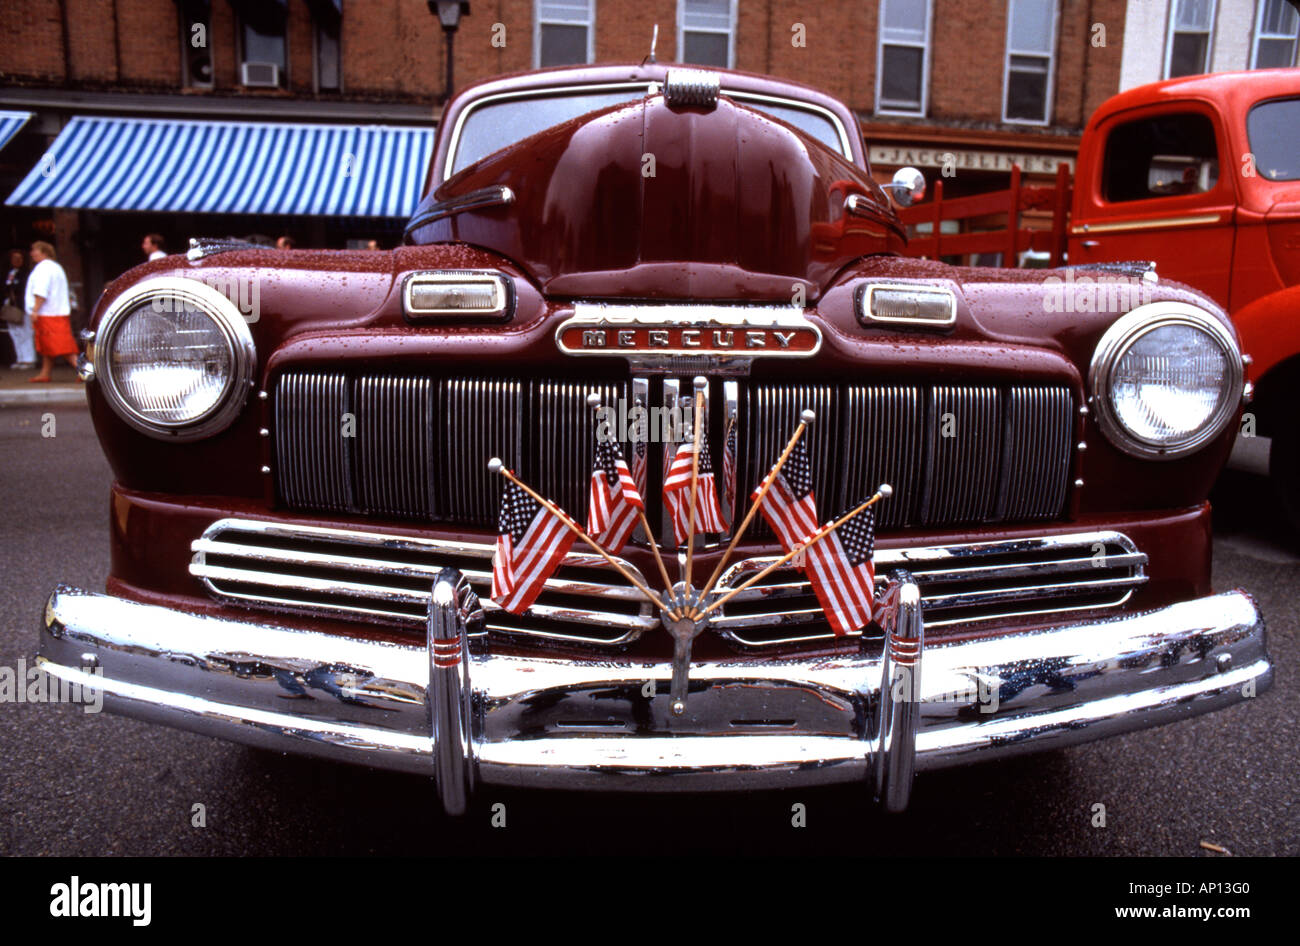 Classic Mercury car at American festival Stock Photo